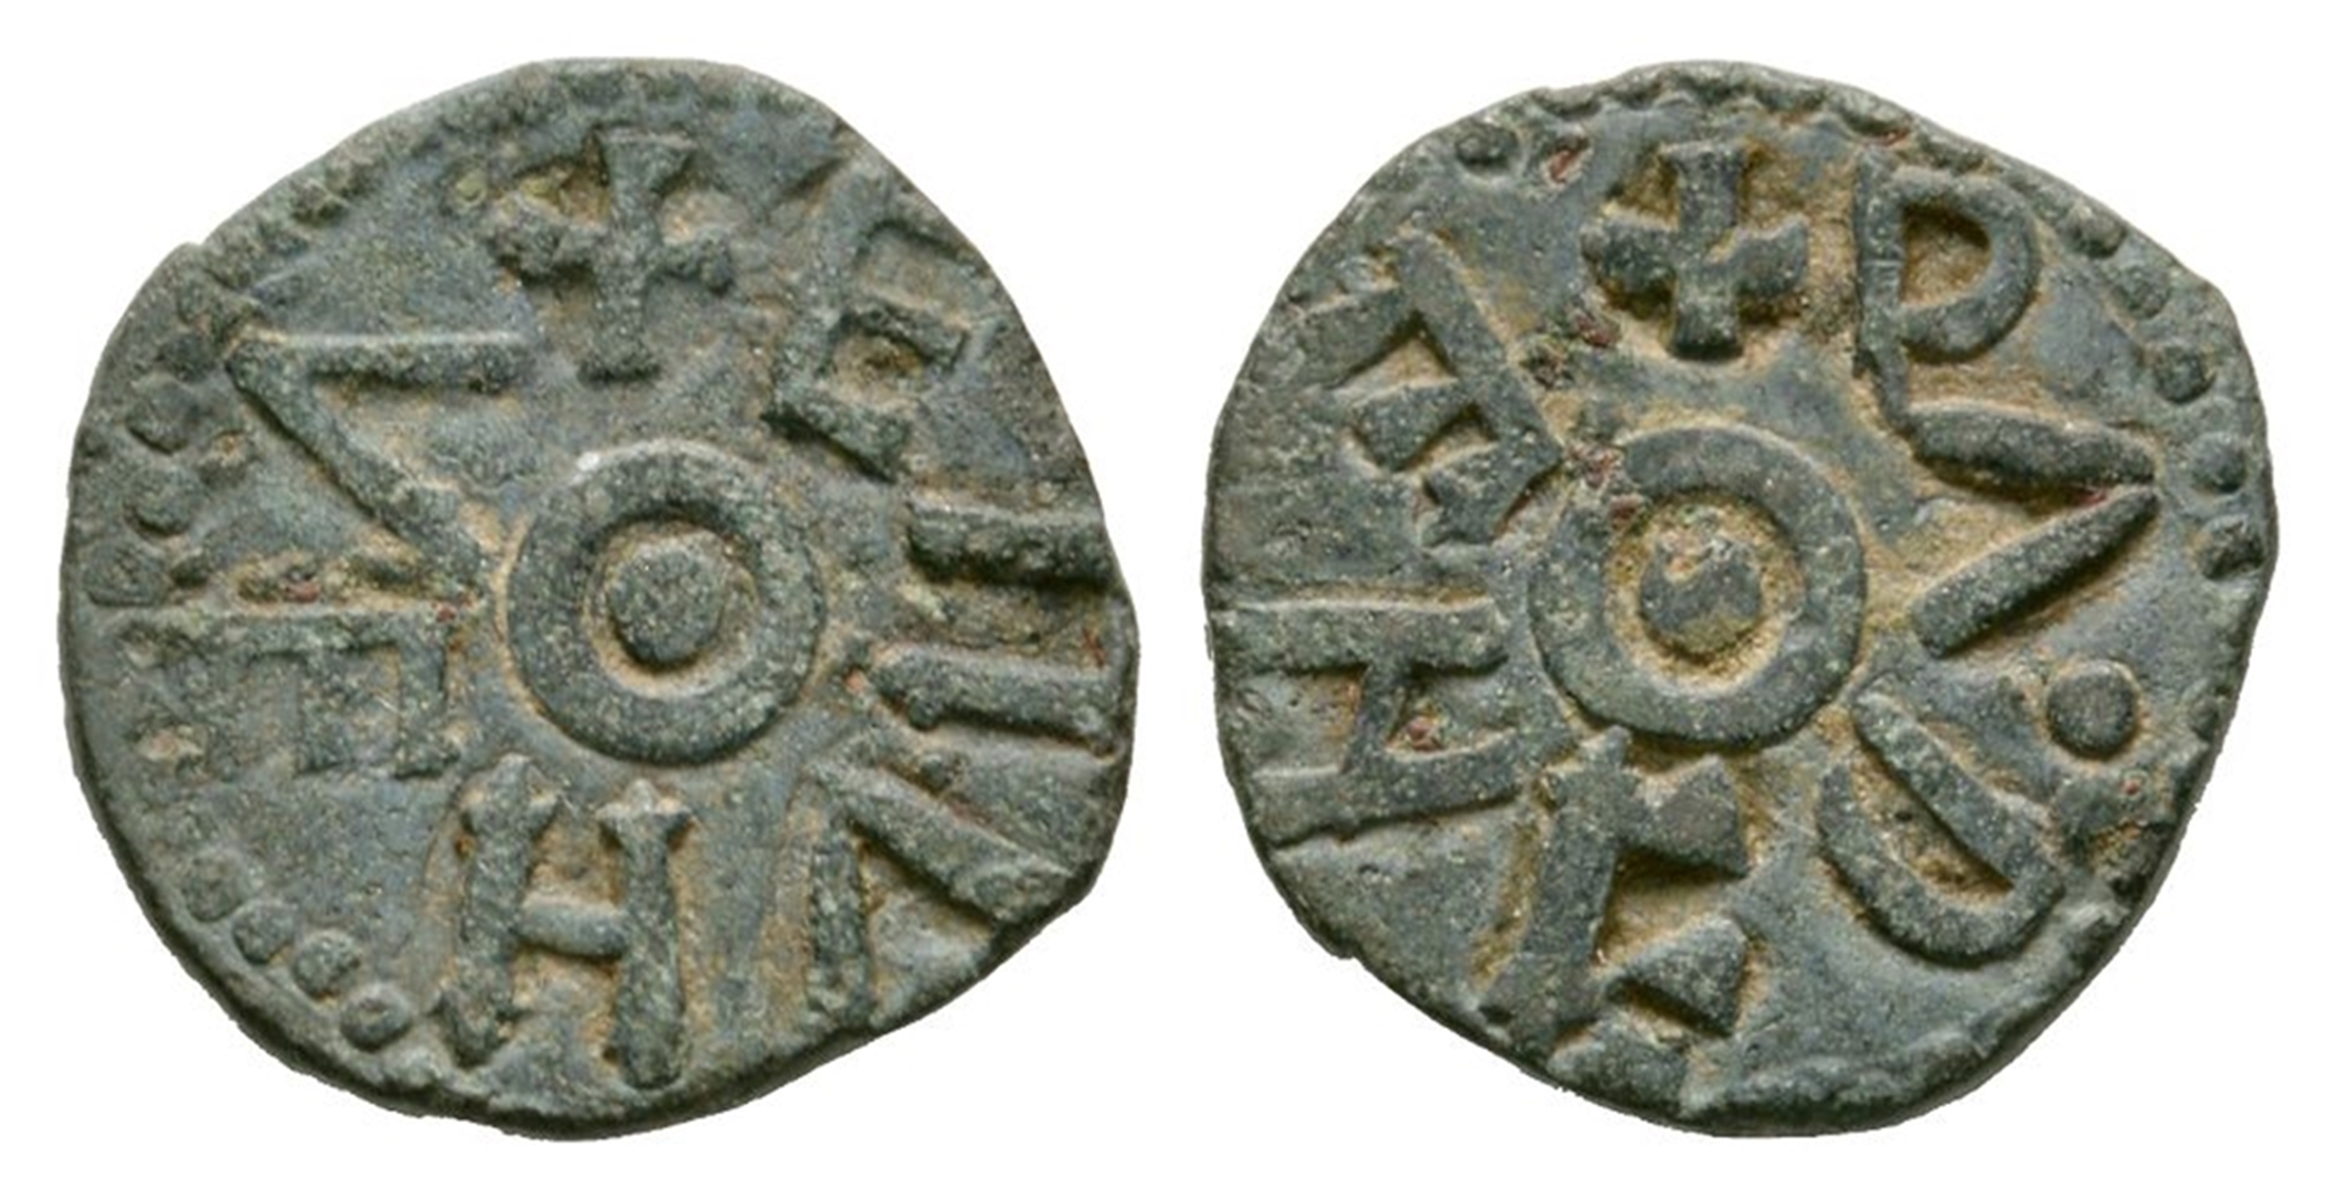 Anglo-Saxon Coins - Northumbria - Eanred - Irregular Styca